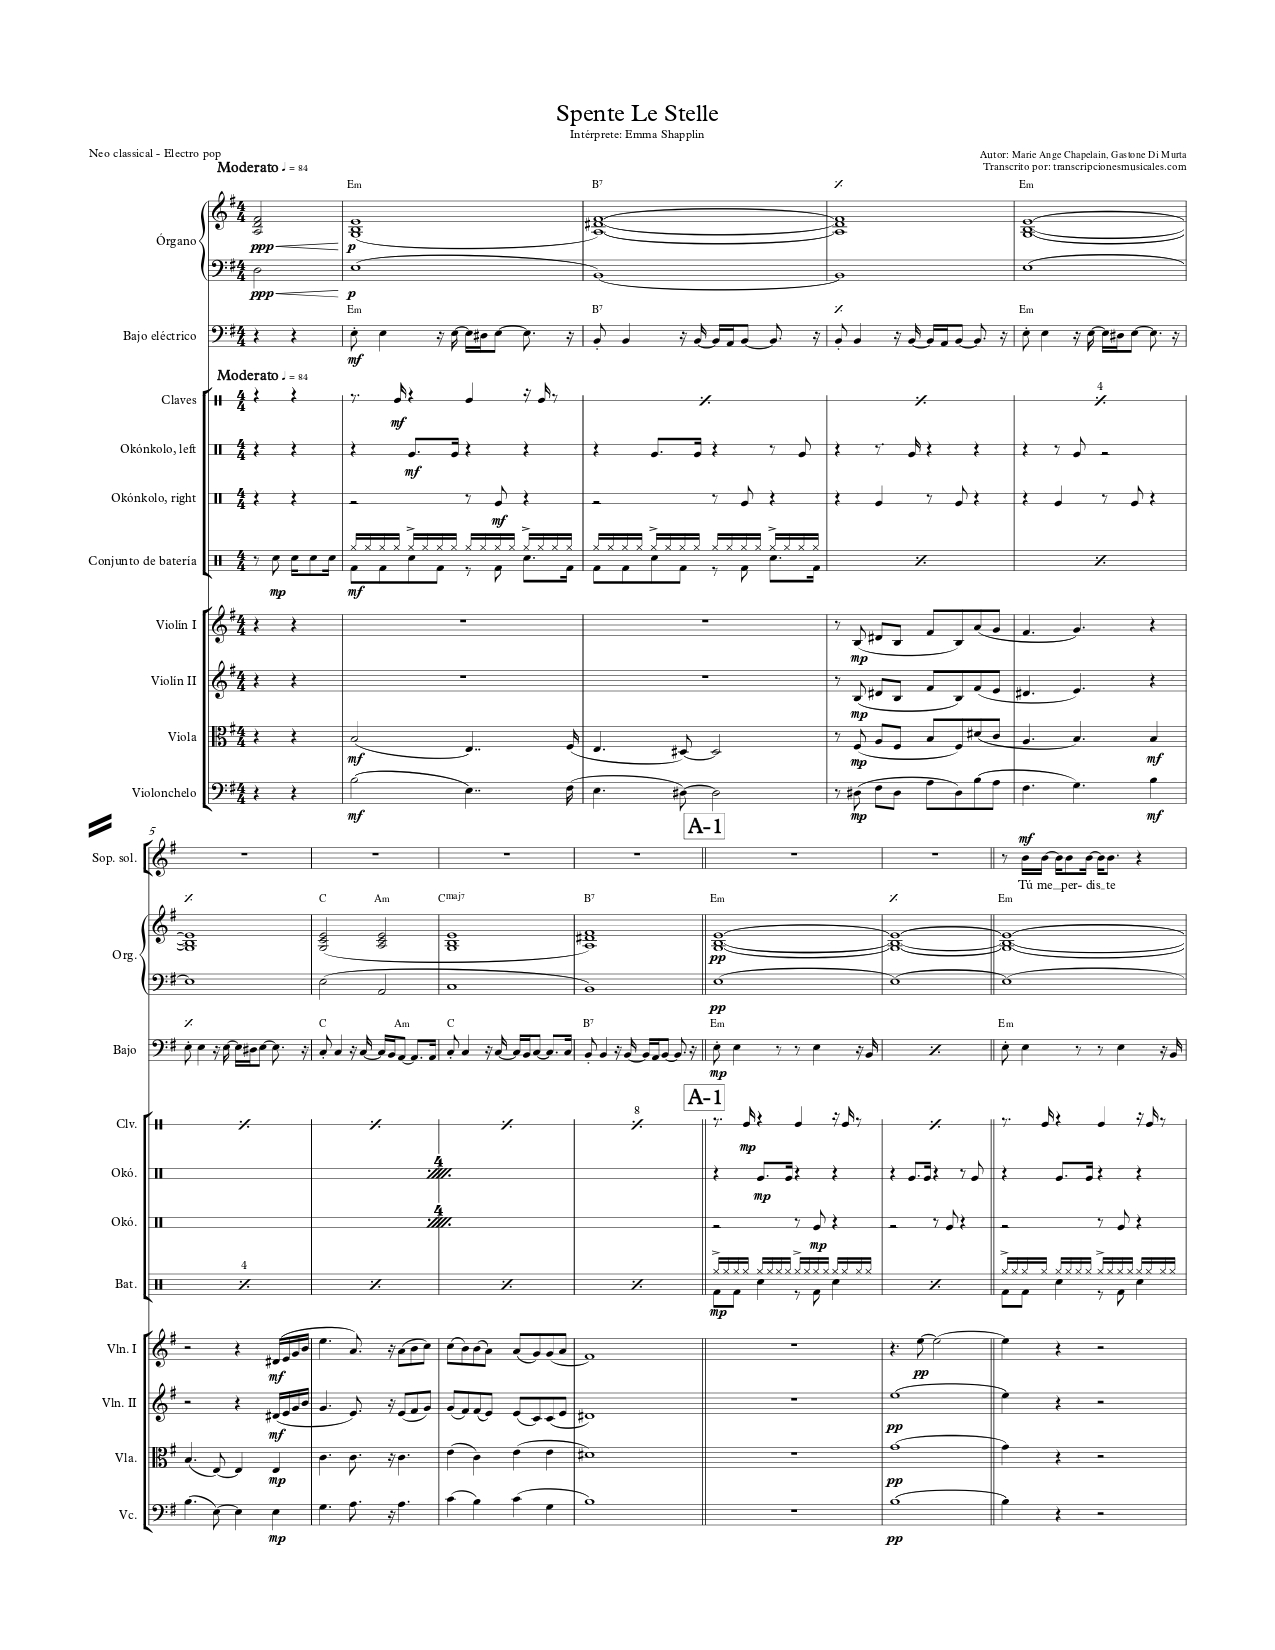 Spente Le Stelle - sheet music page 1